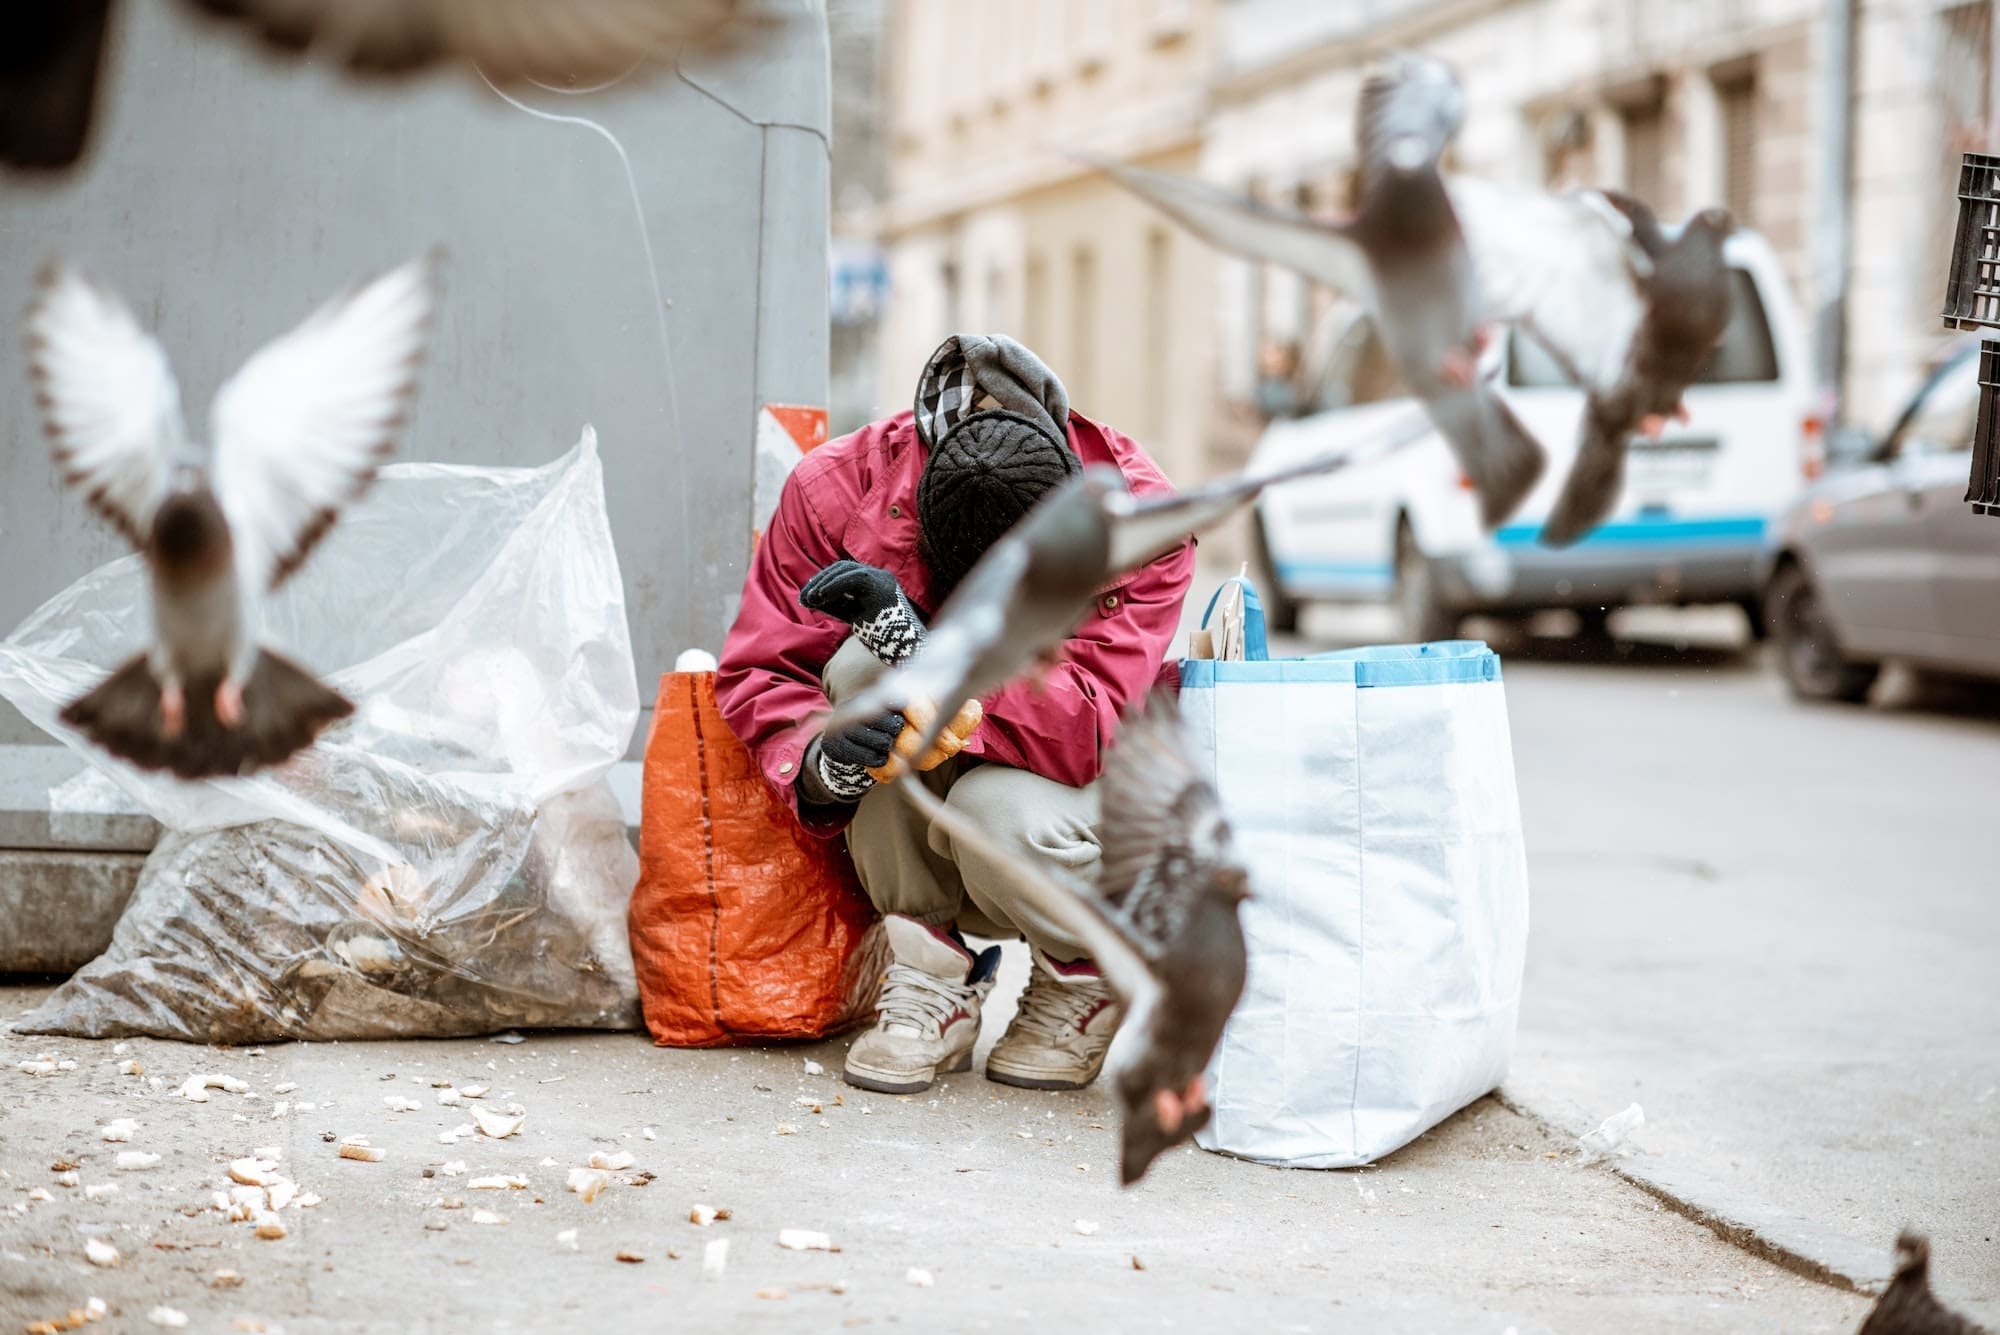 Homeless beggar near the trash in the city